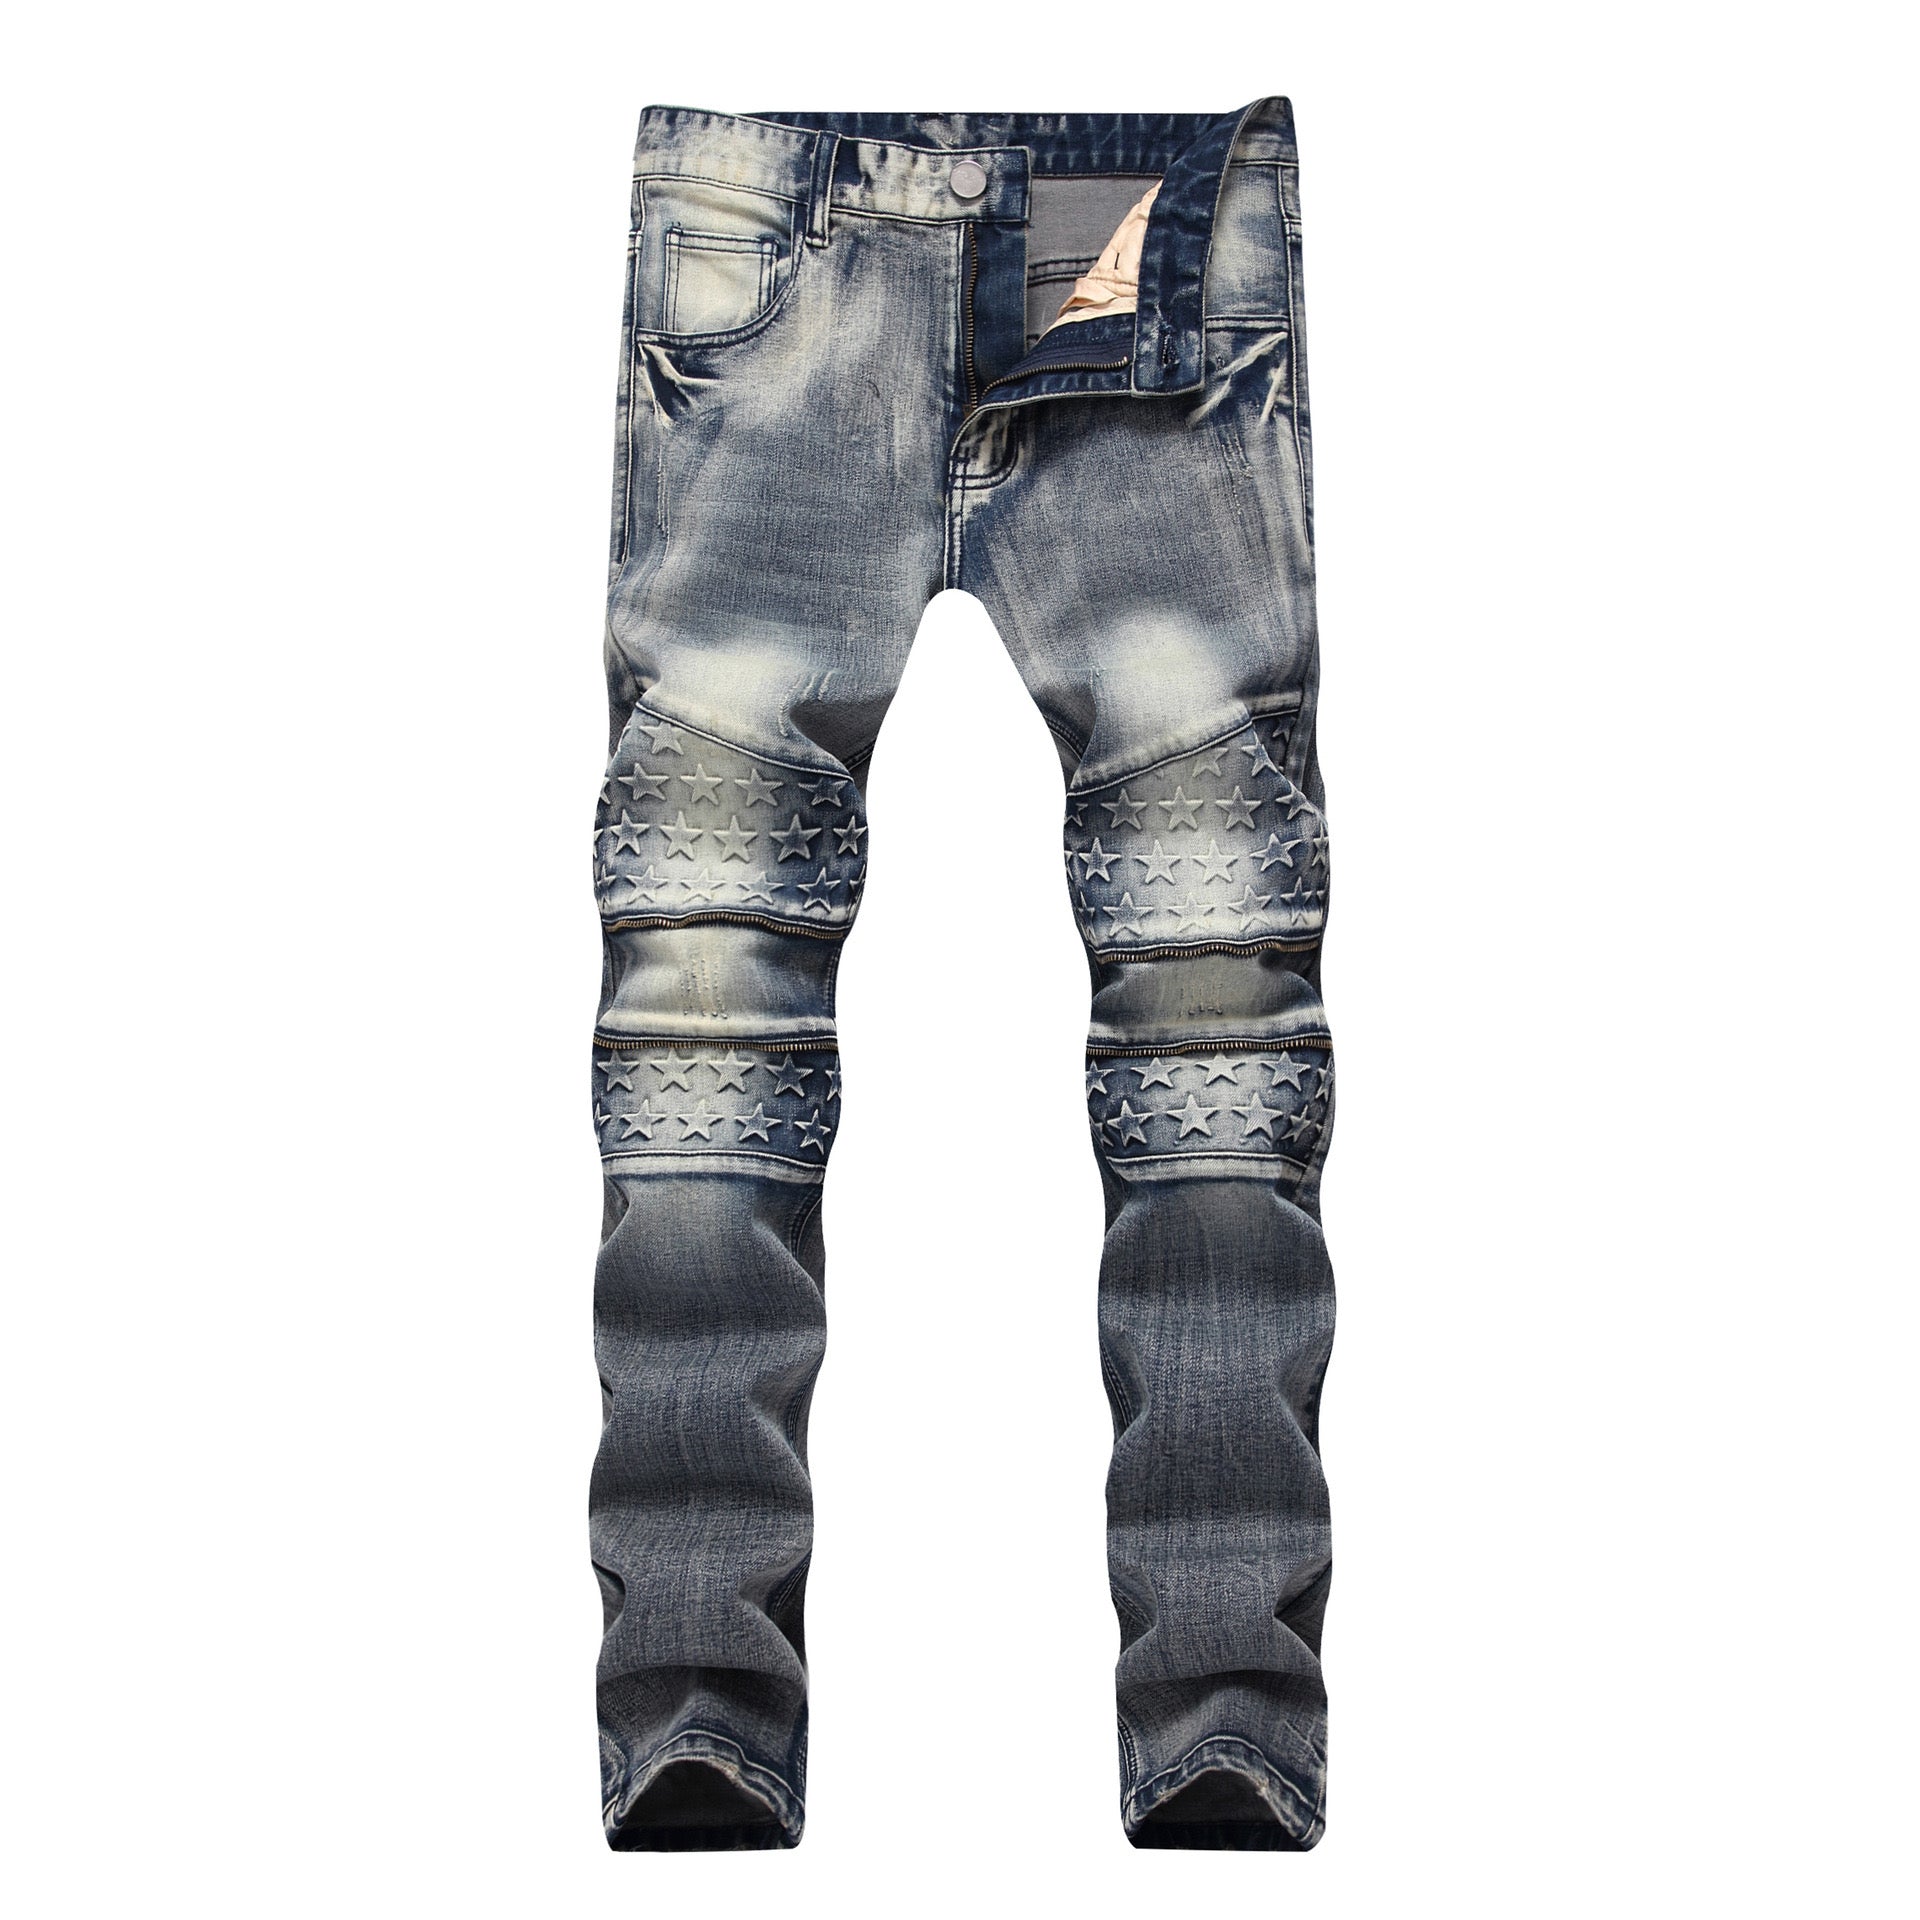 BGUU - Denim Jeans for Men - Sarman Fashion - Wholesale Clothing Fashion Brand for Men from Canada